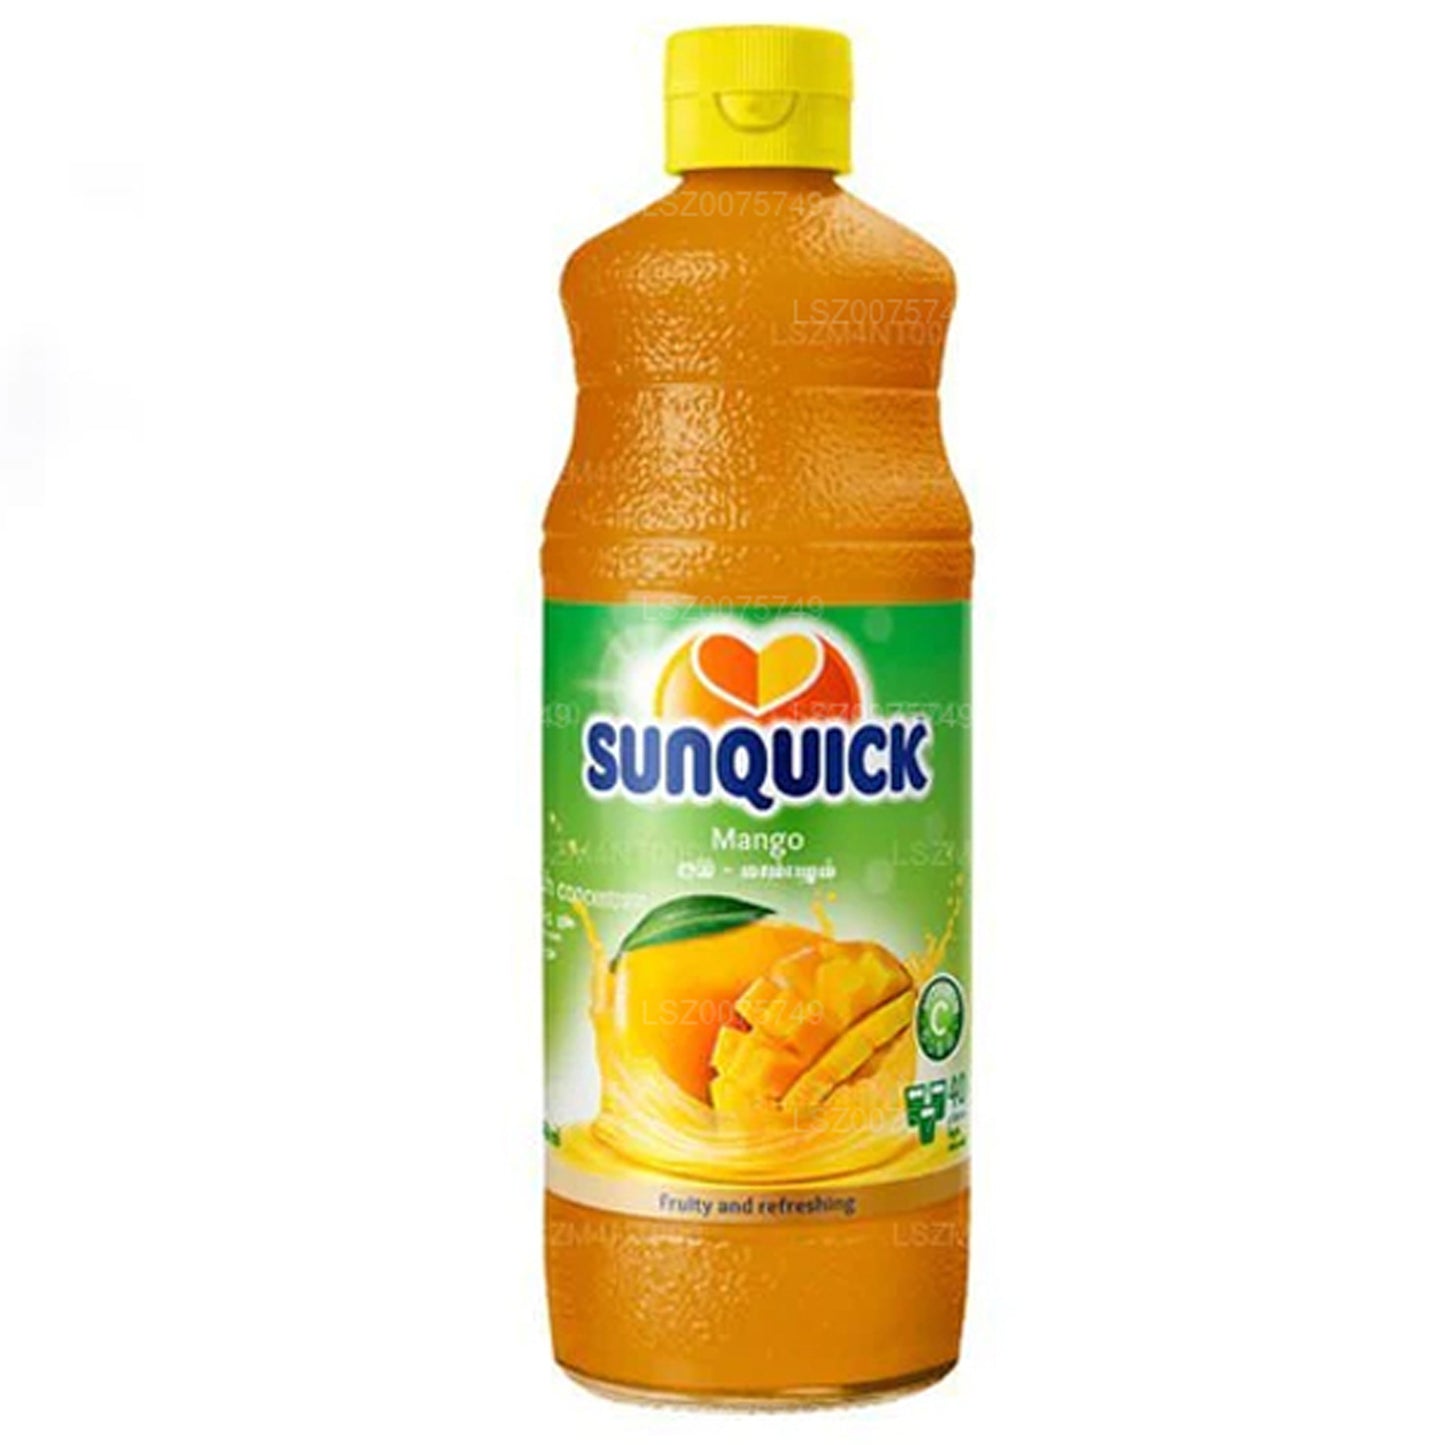 Sunquick Mangue (840 ml)